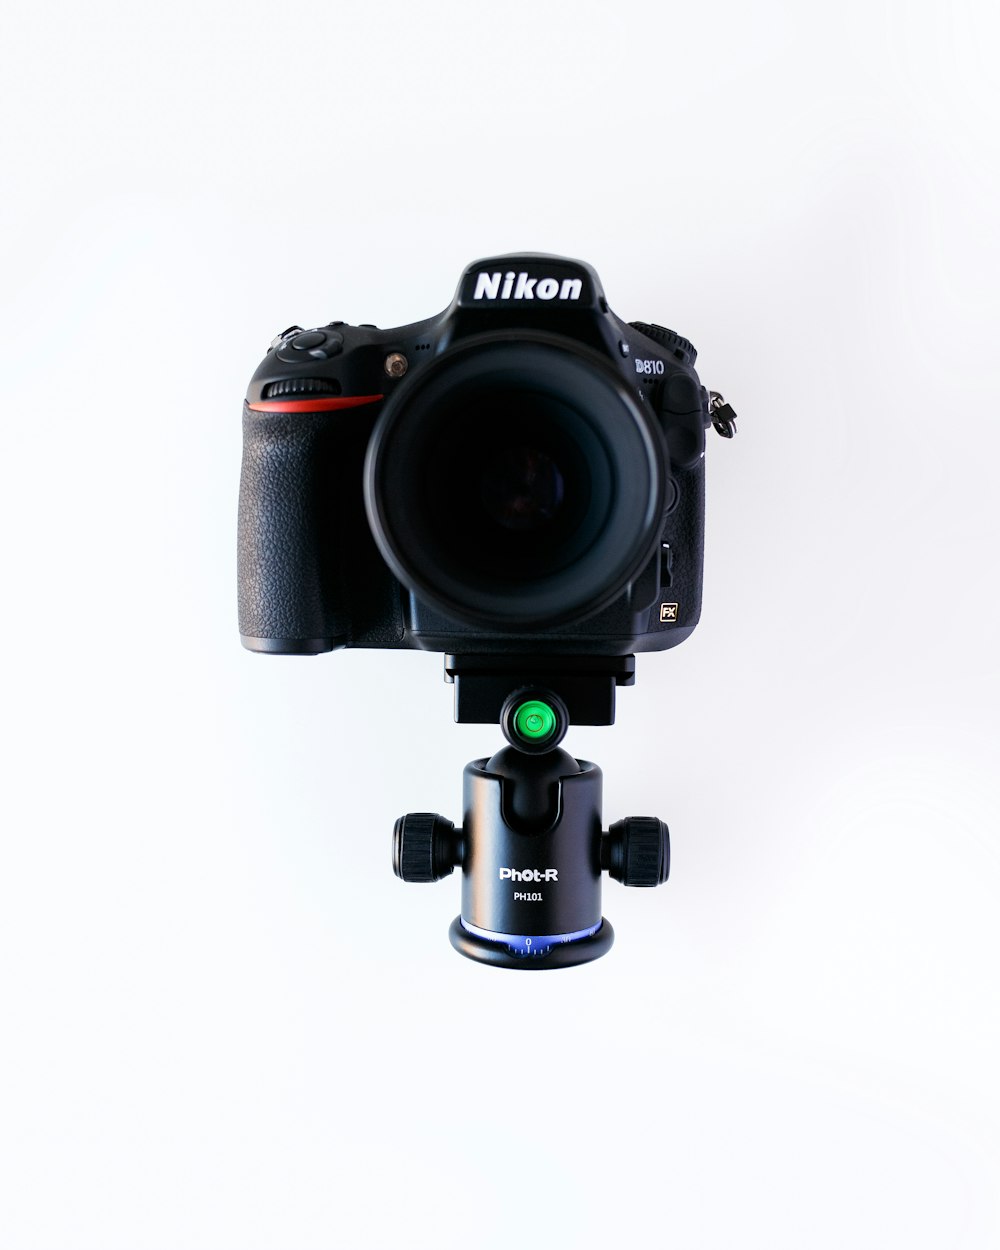 schwarze Nikon DSLR-Kamera mit Objektiv